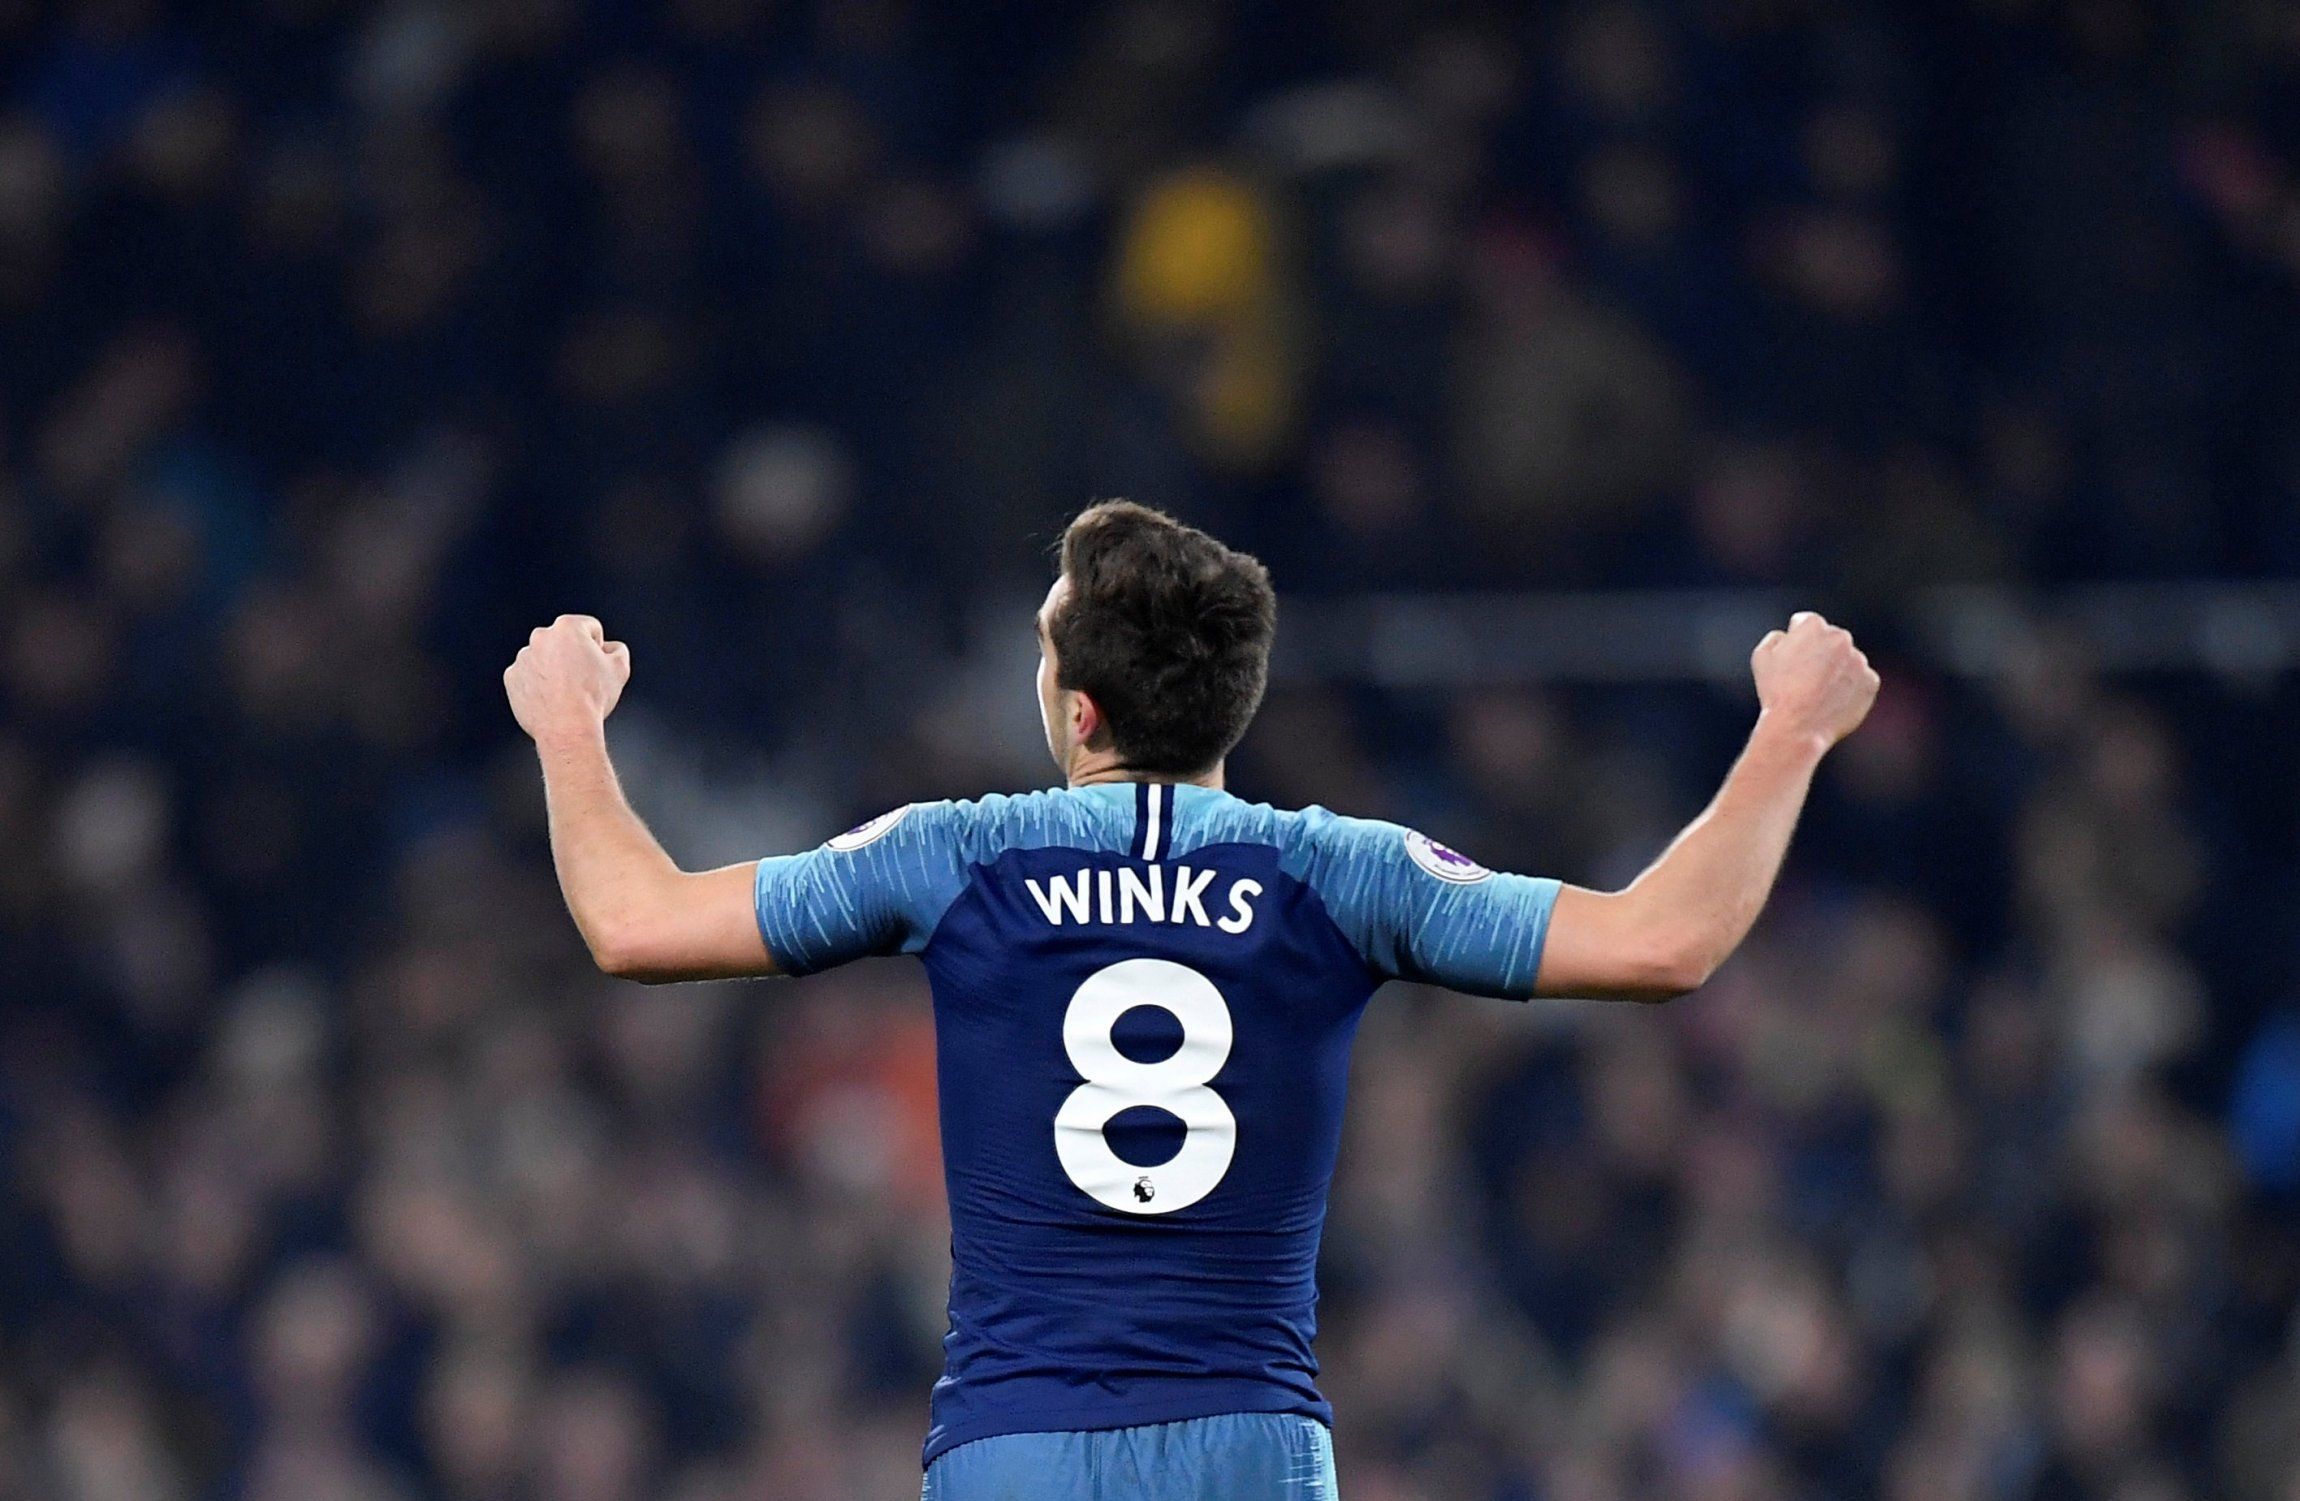 Harry Winks celebrates scoring for Tottenham Hotspur against Fulham